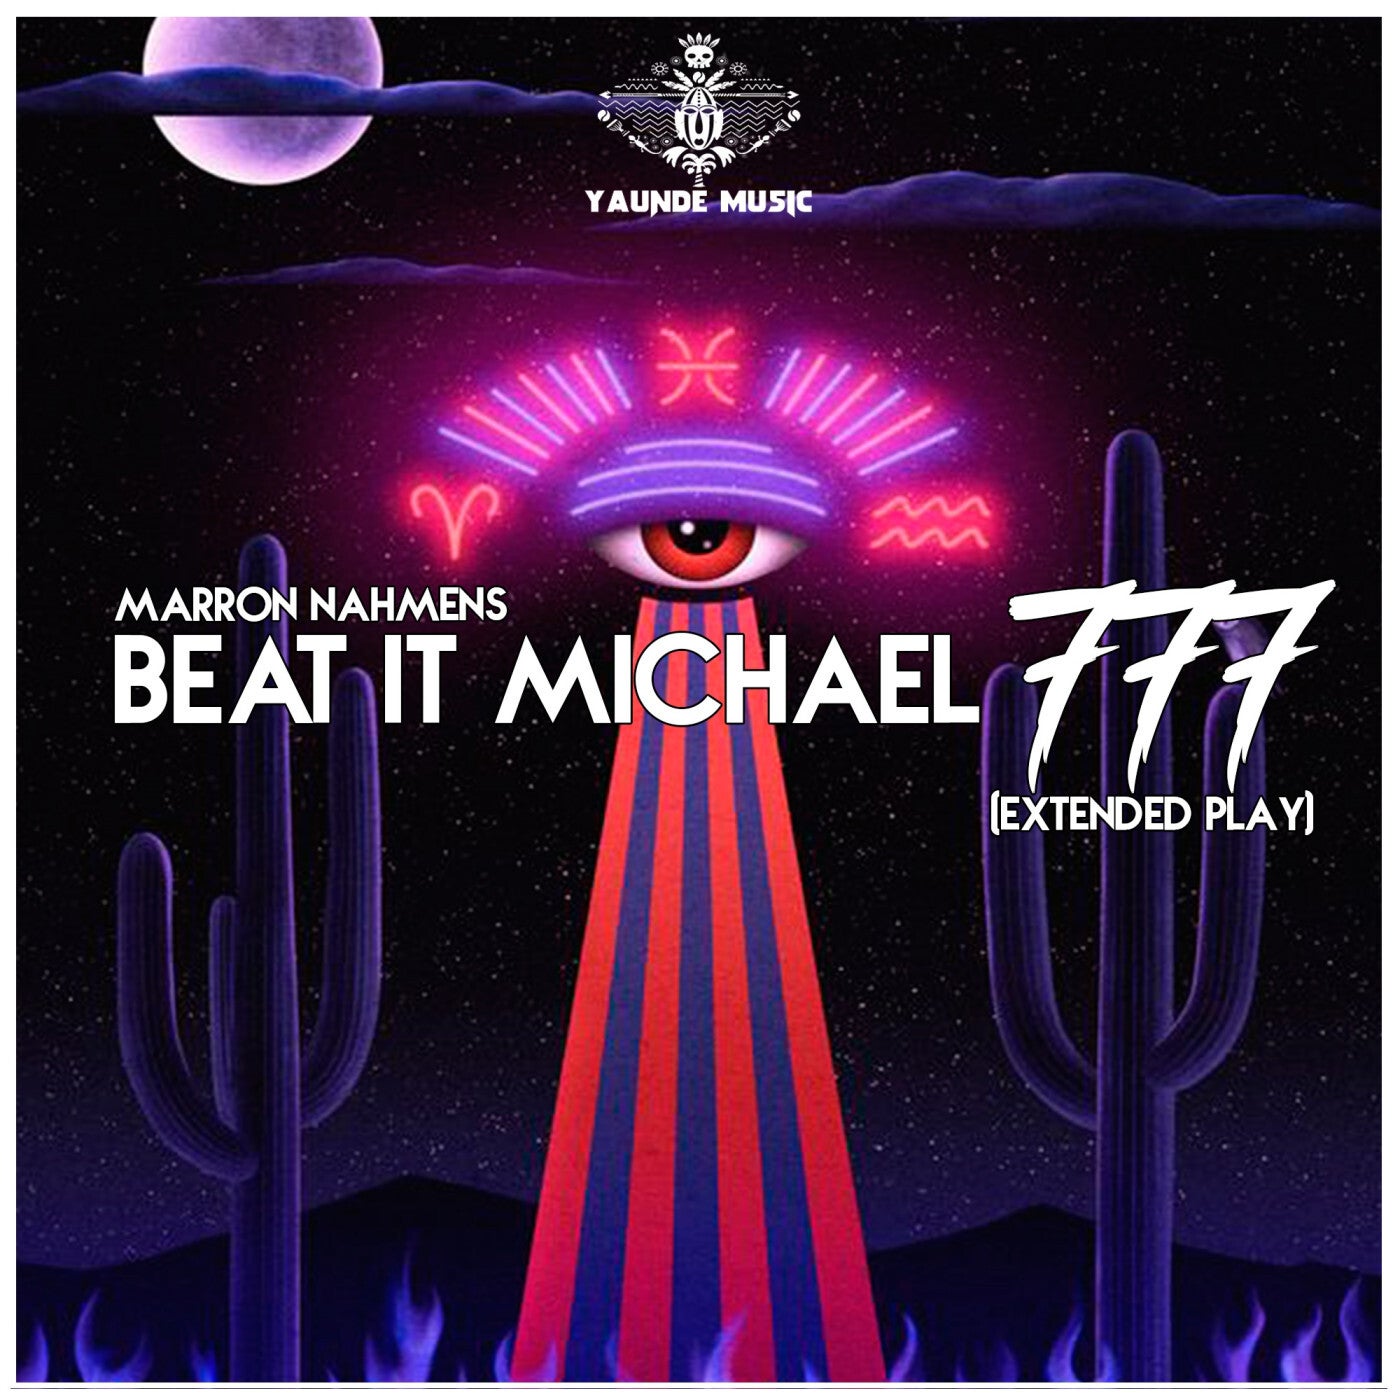 Beat It Michael 777